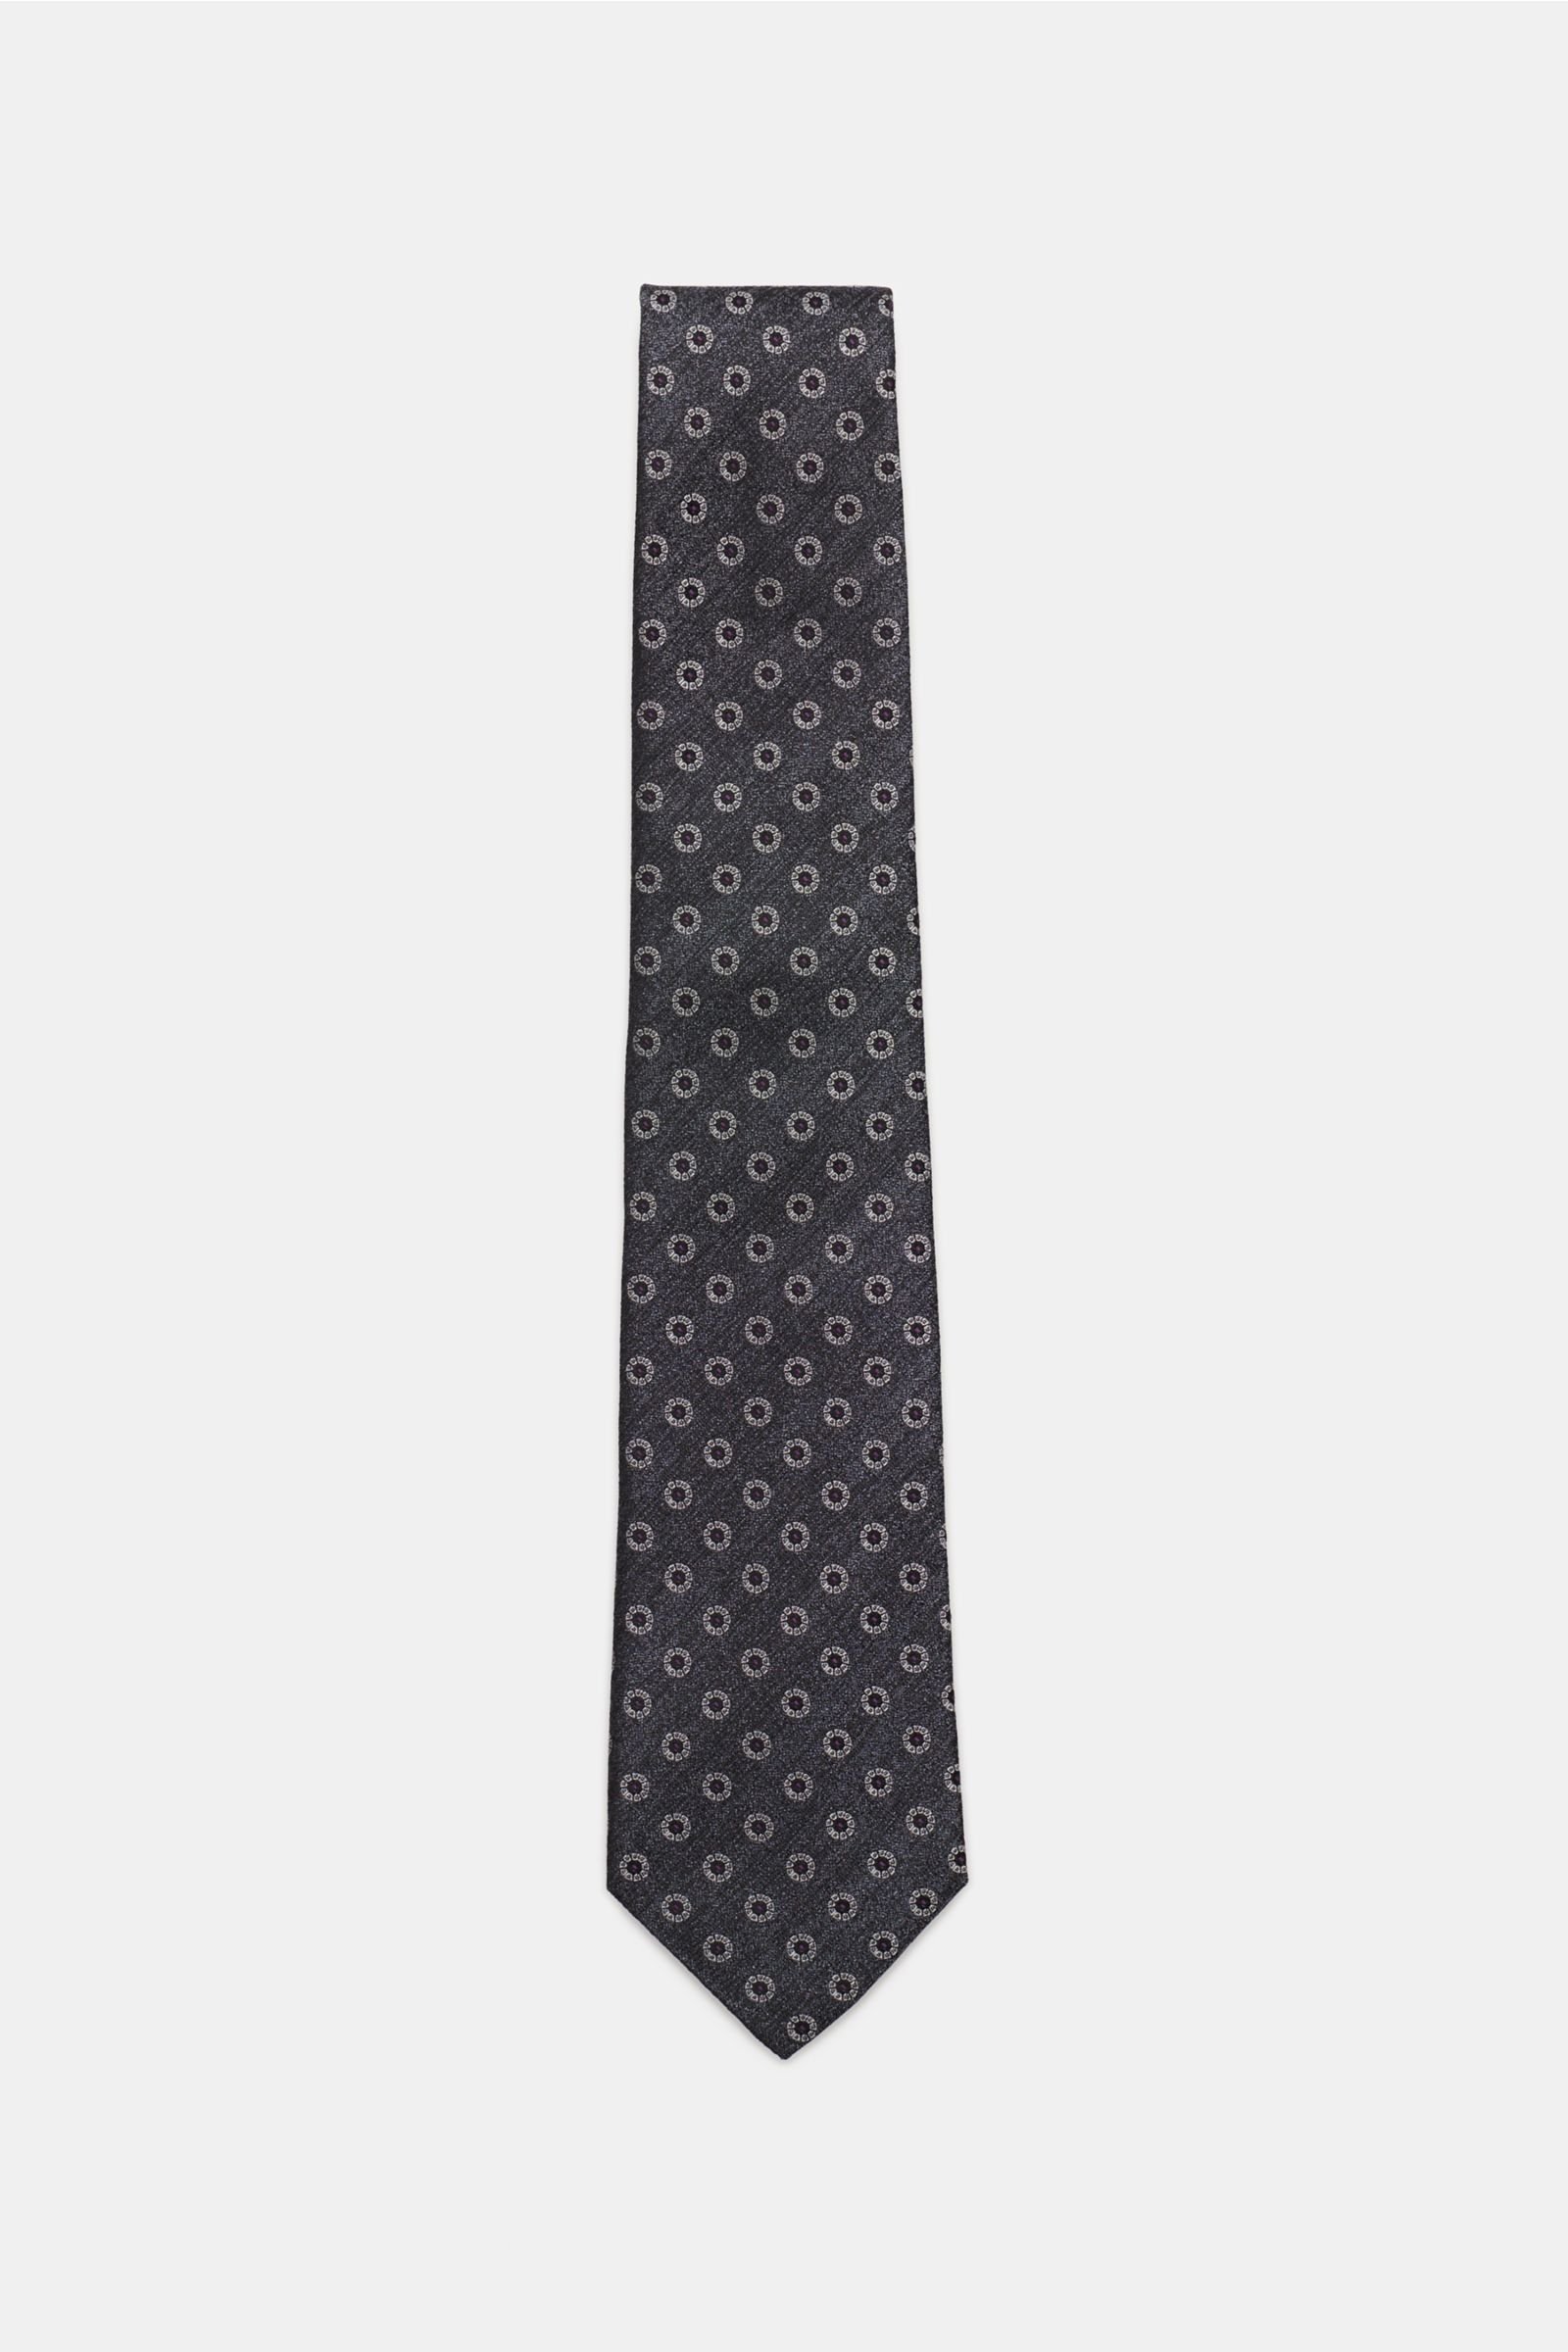 Silk tie dark grey patterned